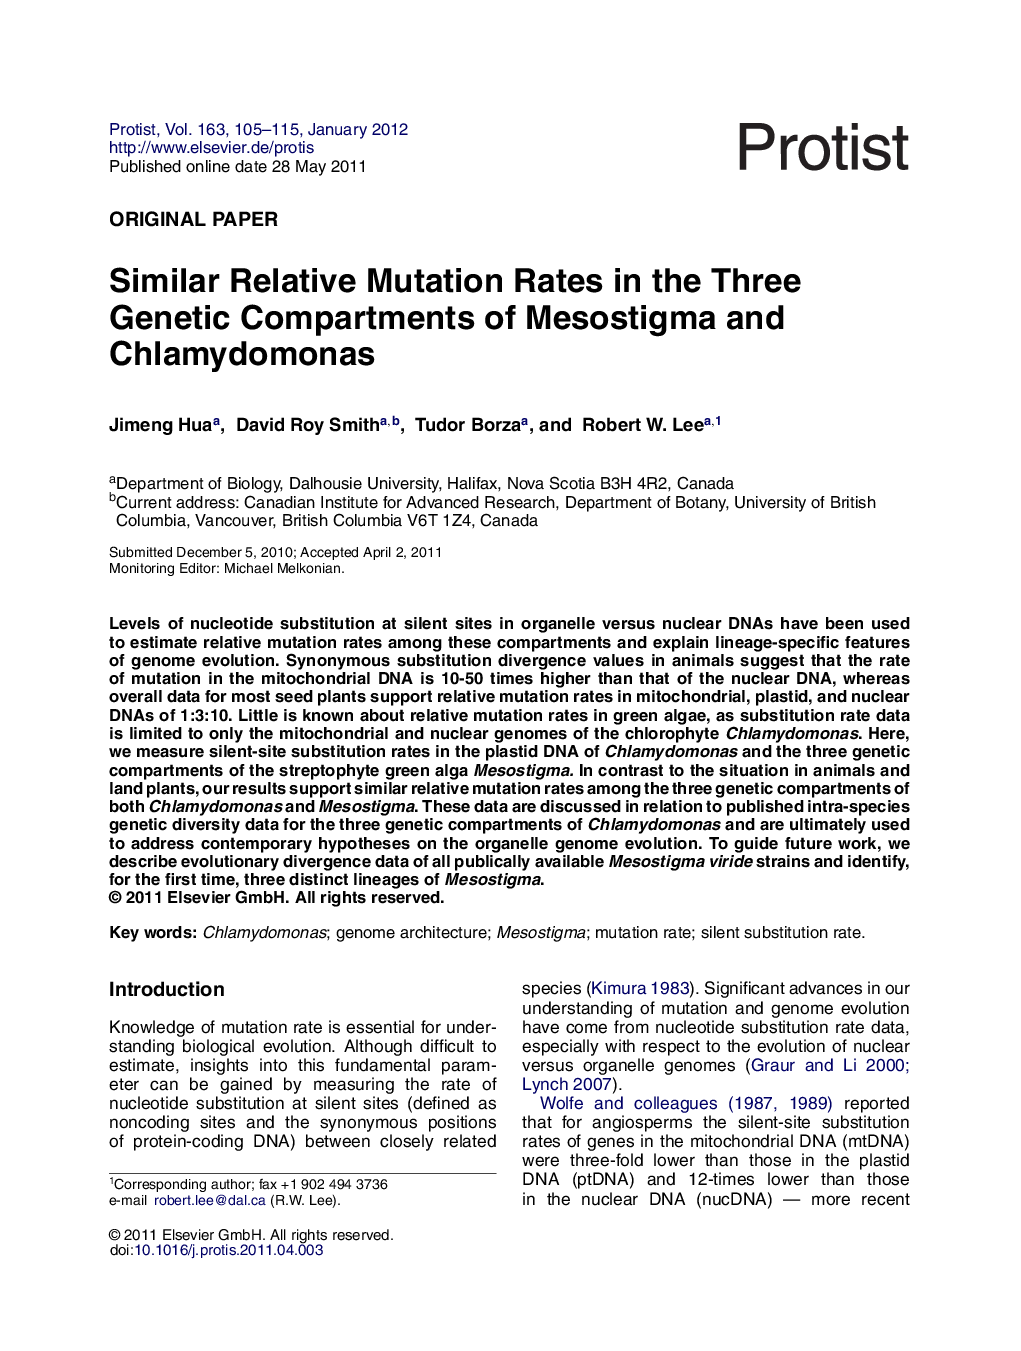 Similar Relative Mutation Rates in the Three Genetic Compartments of Mesostigma and Chlamydomonas